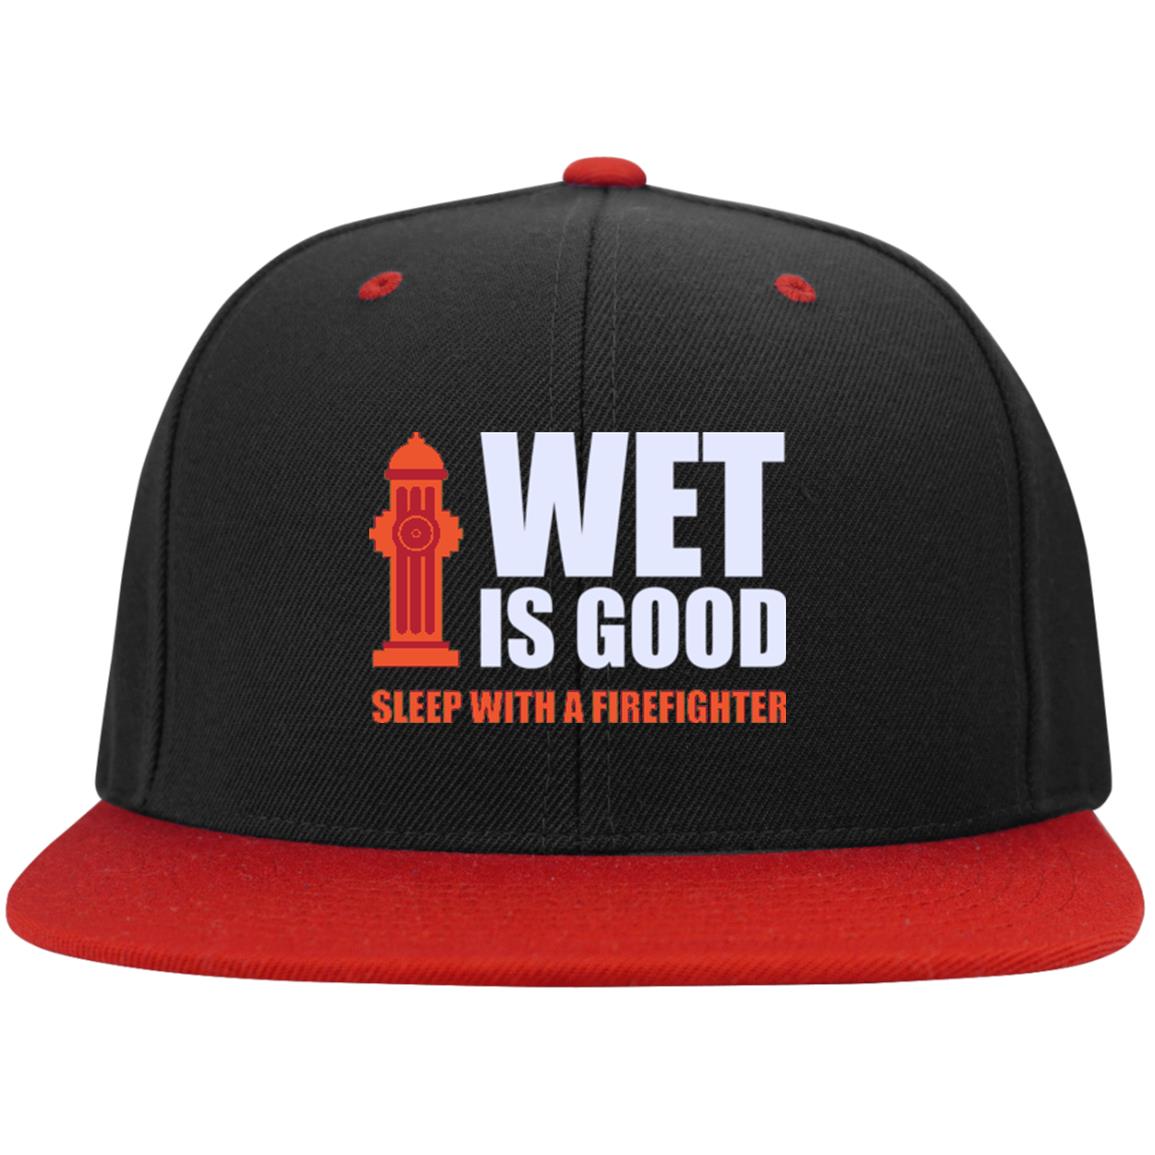 Wet Is Good Snapback Hat - firefighter bestseller